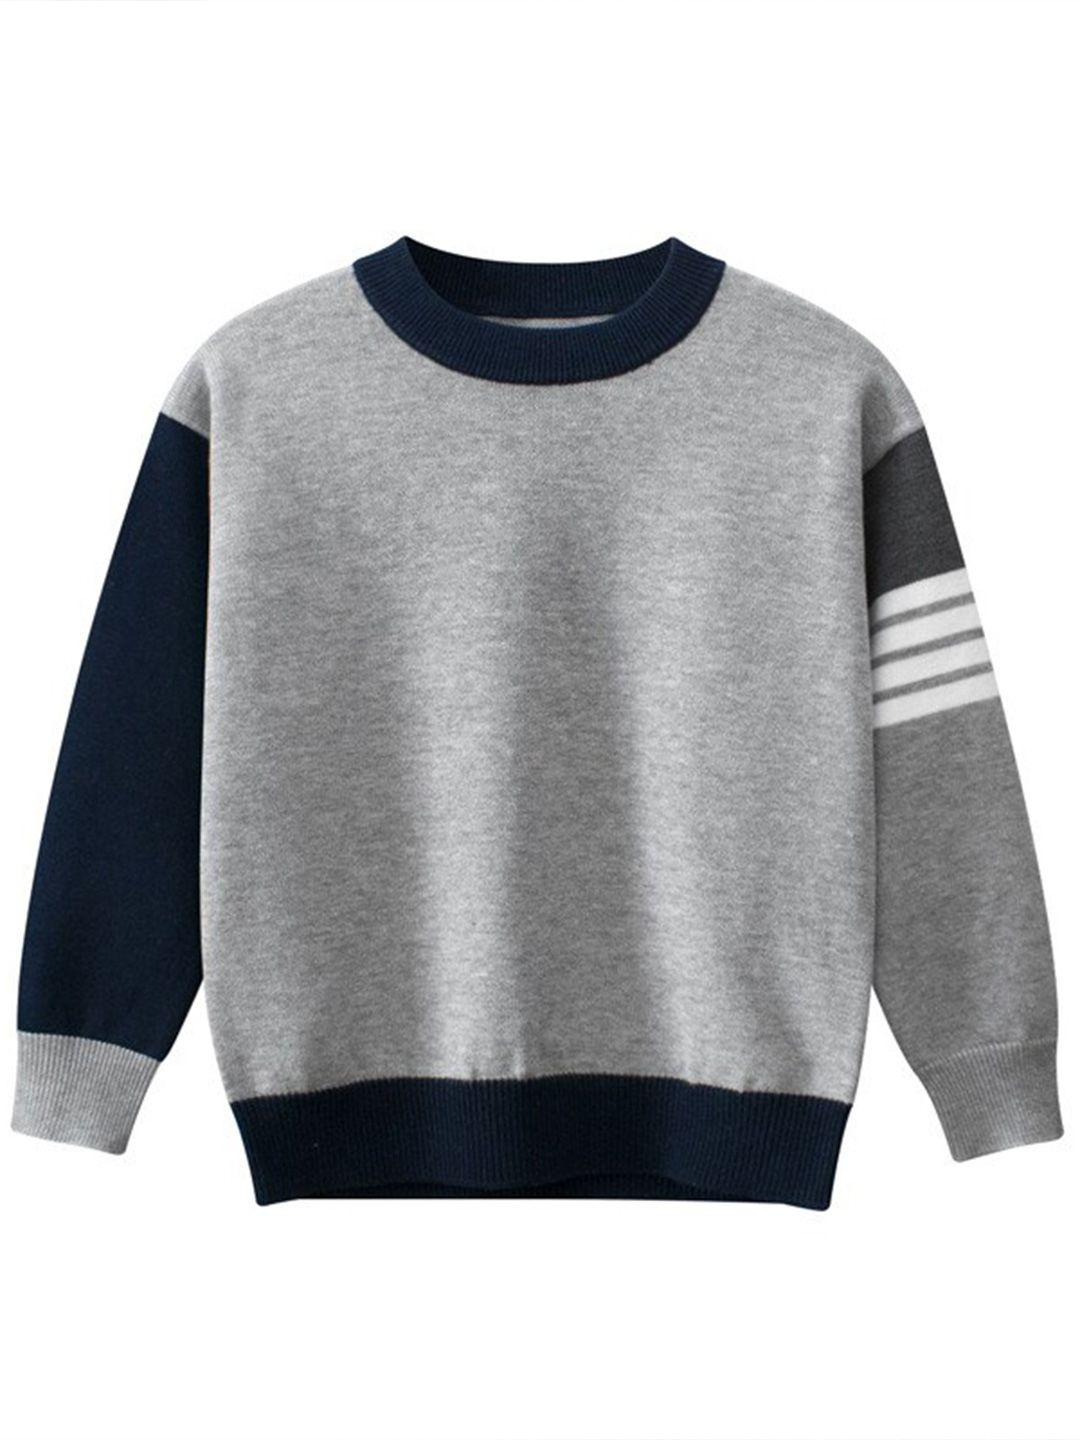 stylecast-boys-grey-colourblocked-ribbed-cotton-pullover